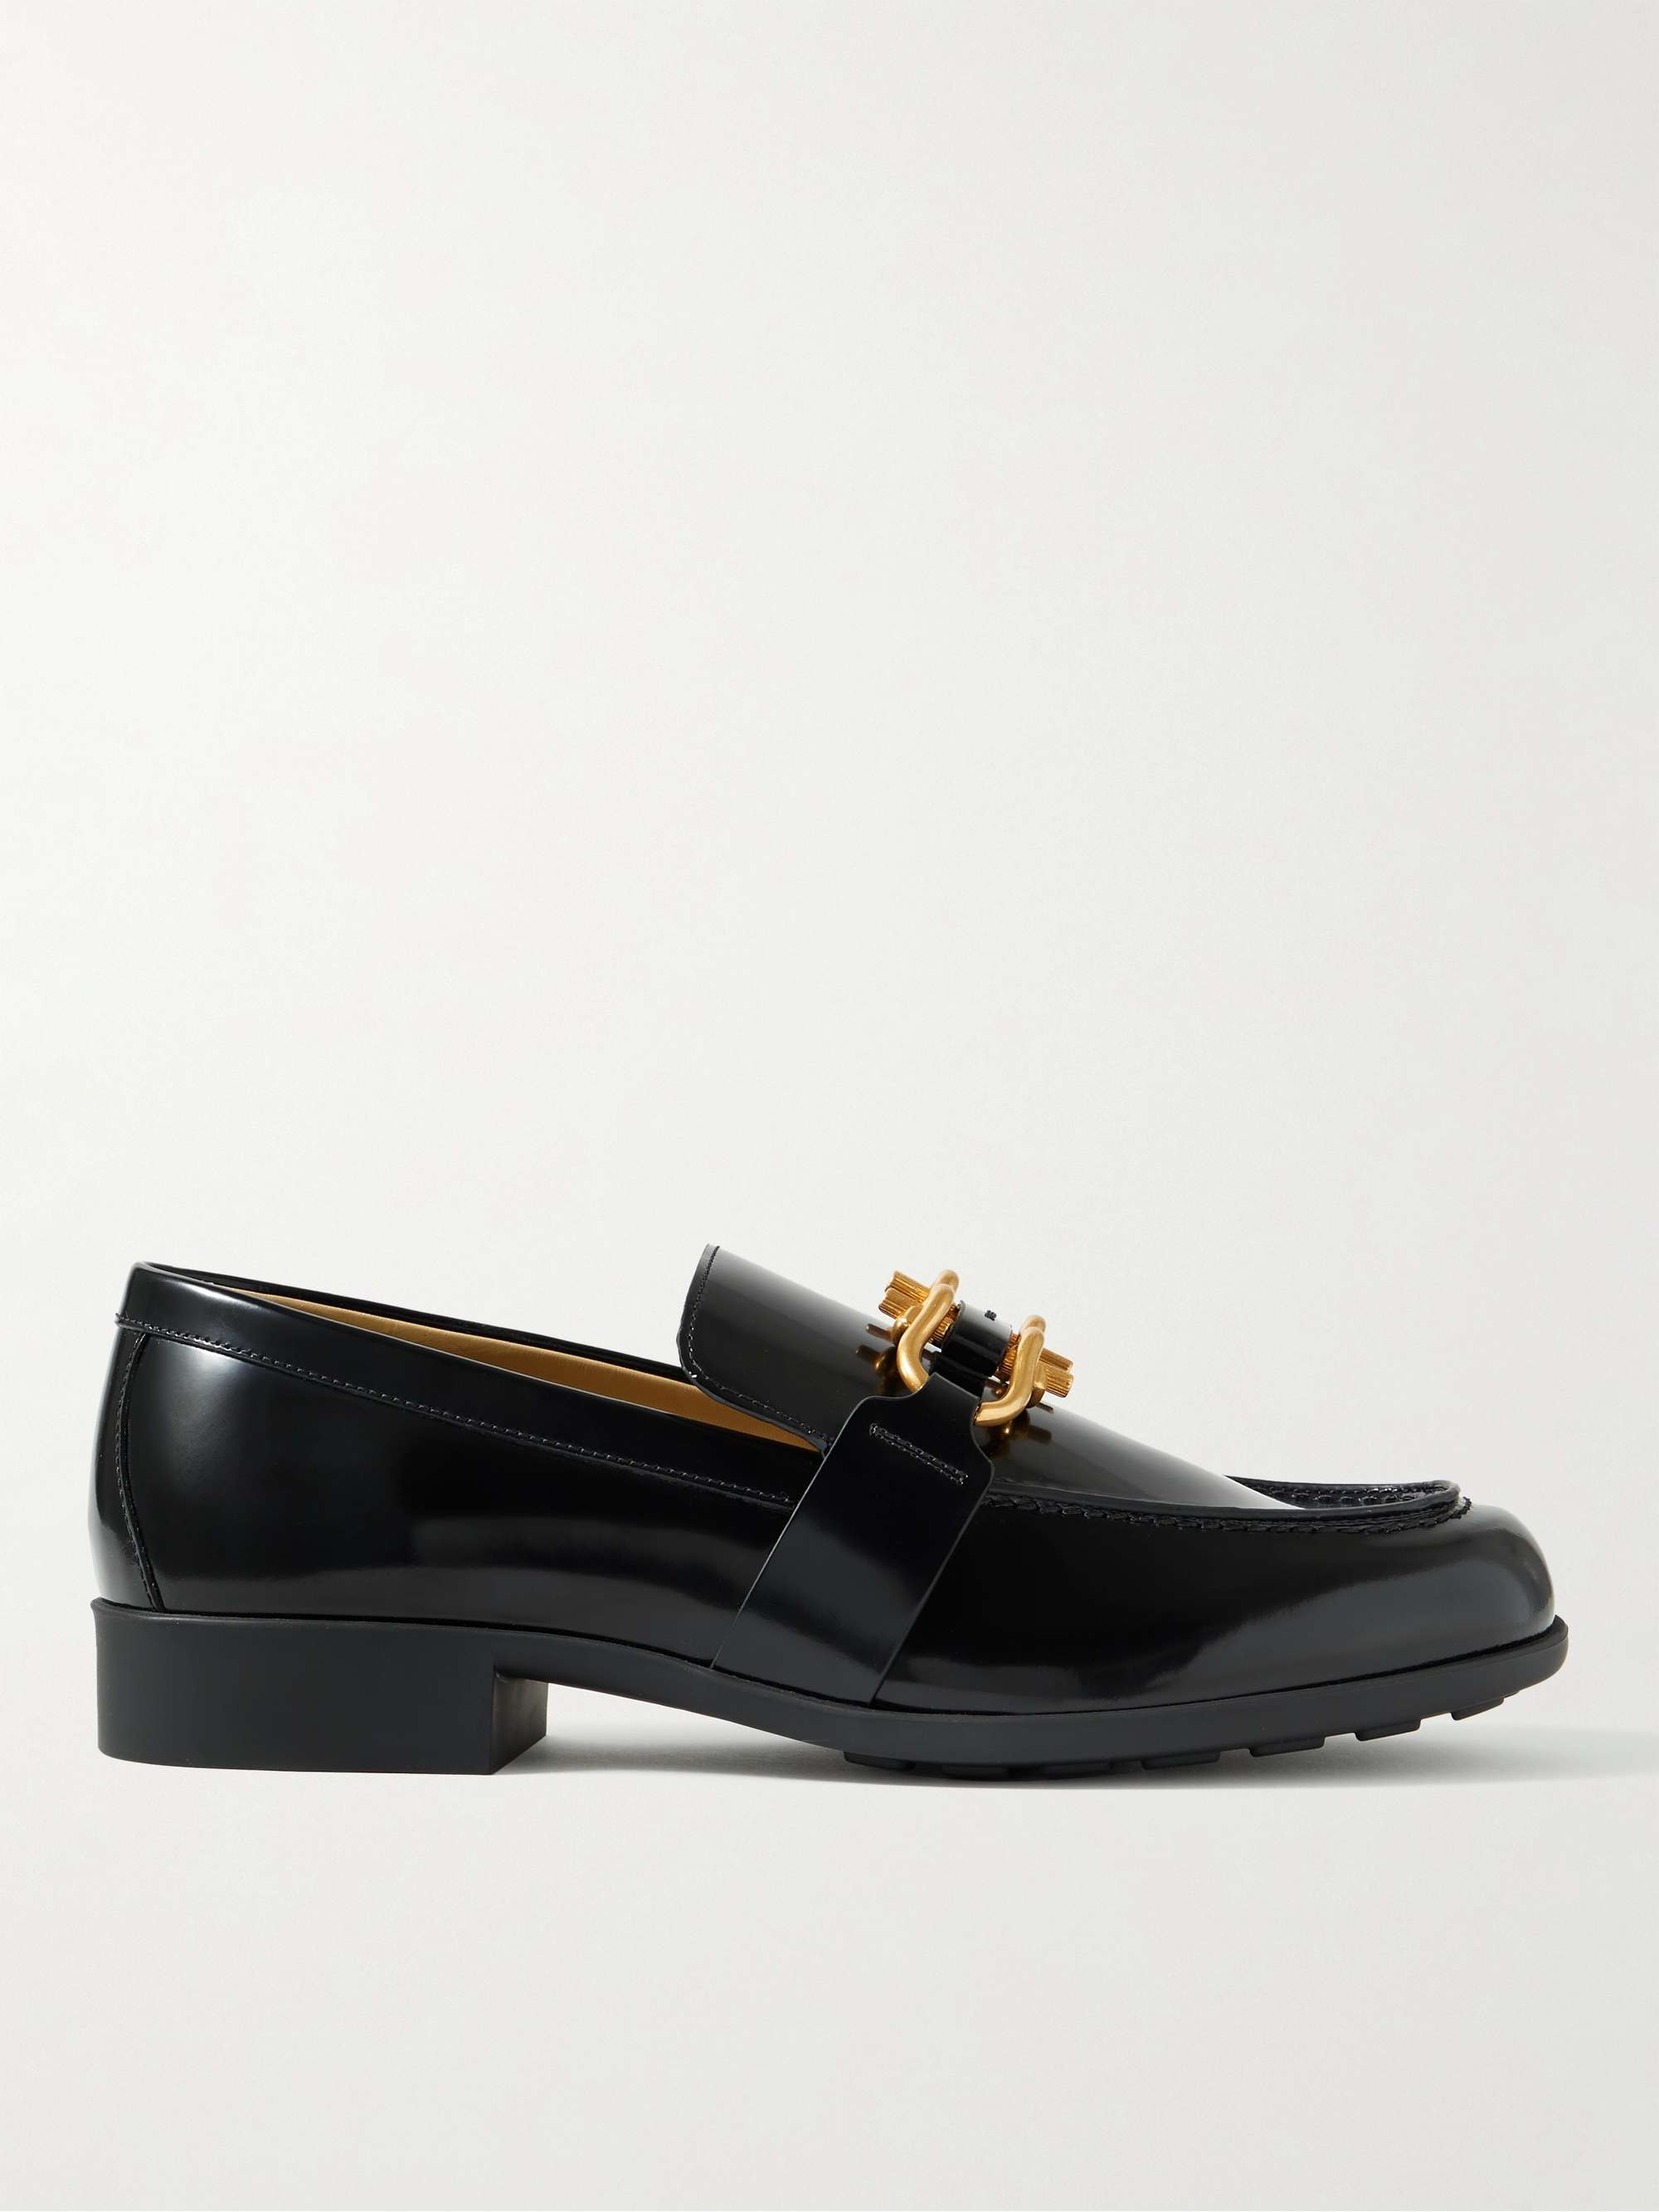 BOTTEGA VENETA Monsieur Embellished Patent-Leather Loafers for Men | MR  PORTER